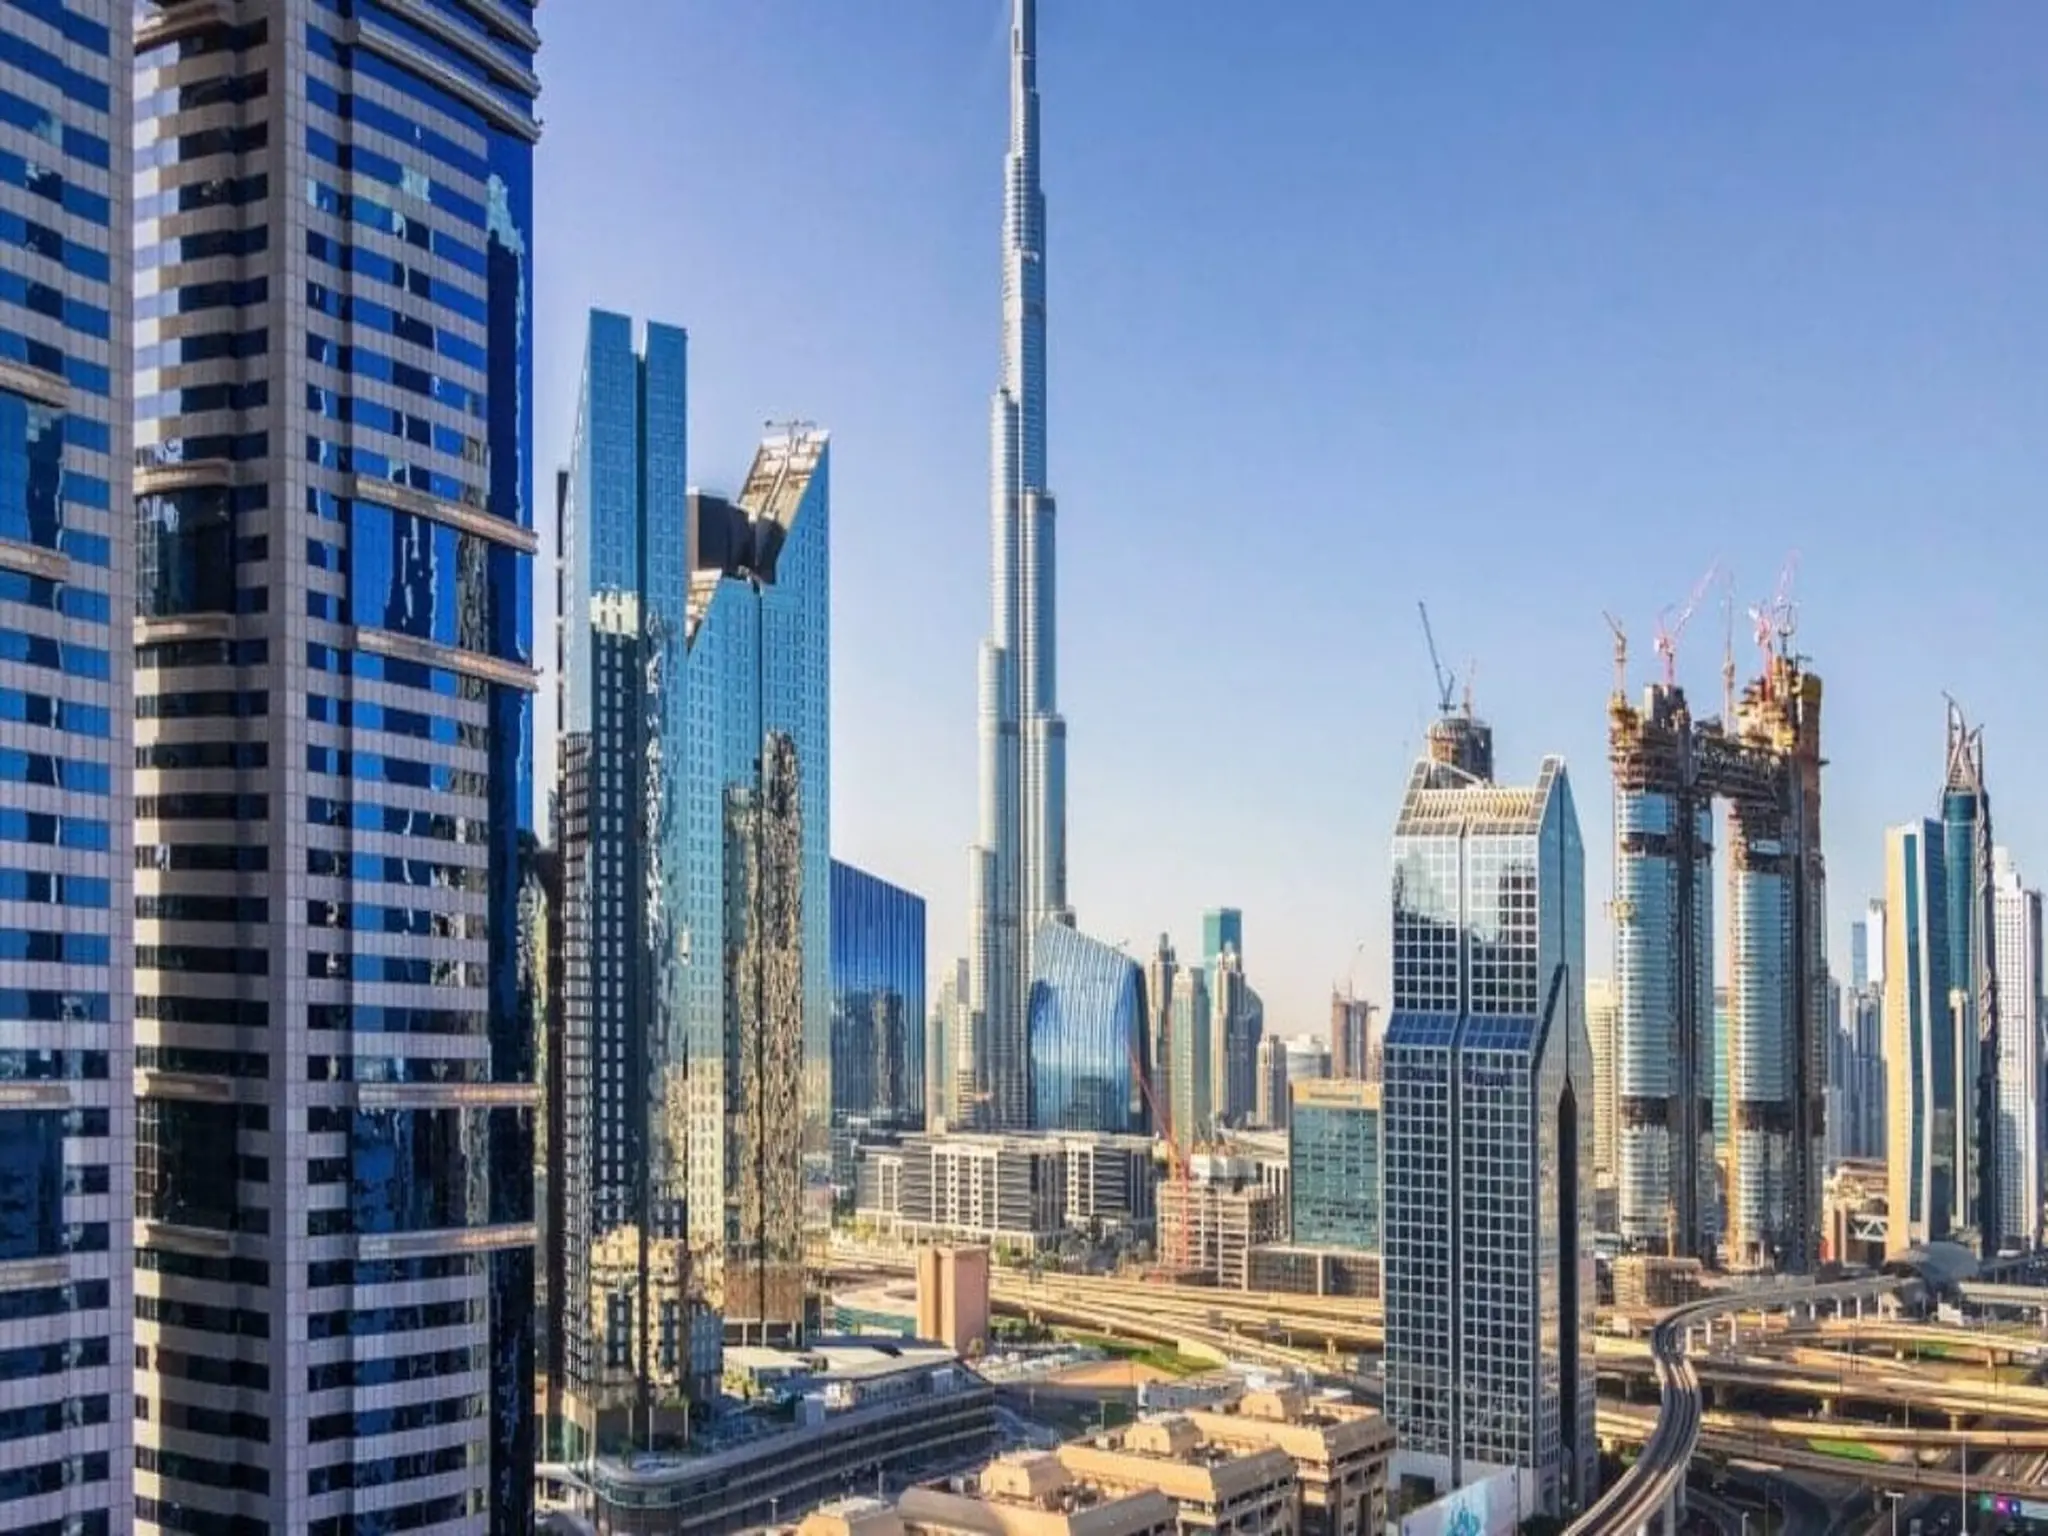 An expatriate in Dubai announces how he earns 2 million dirhams per month